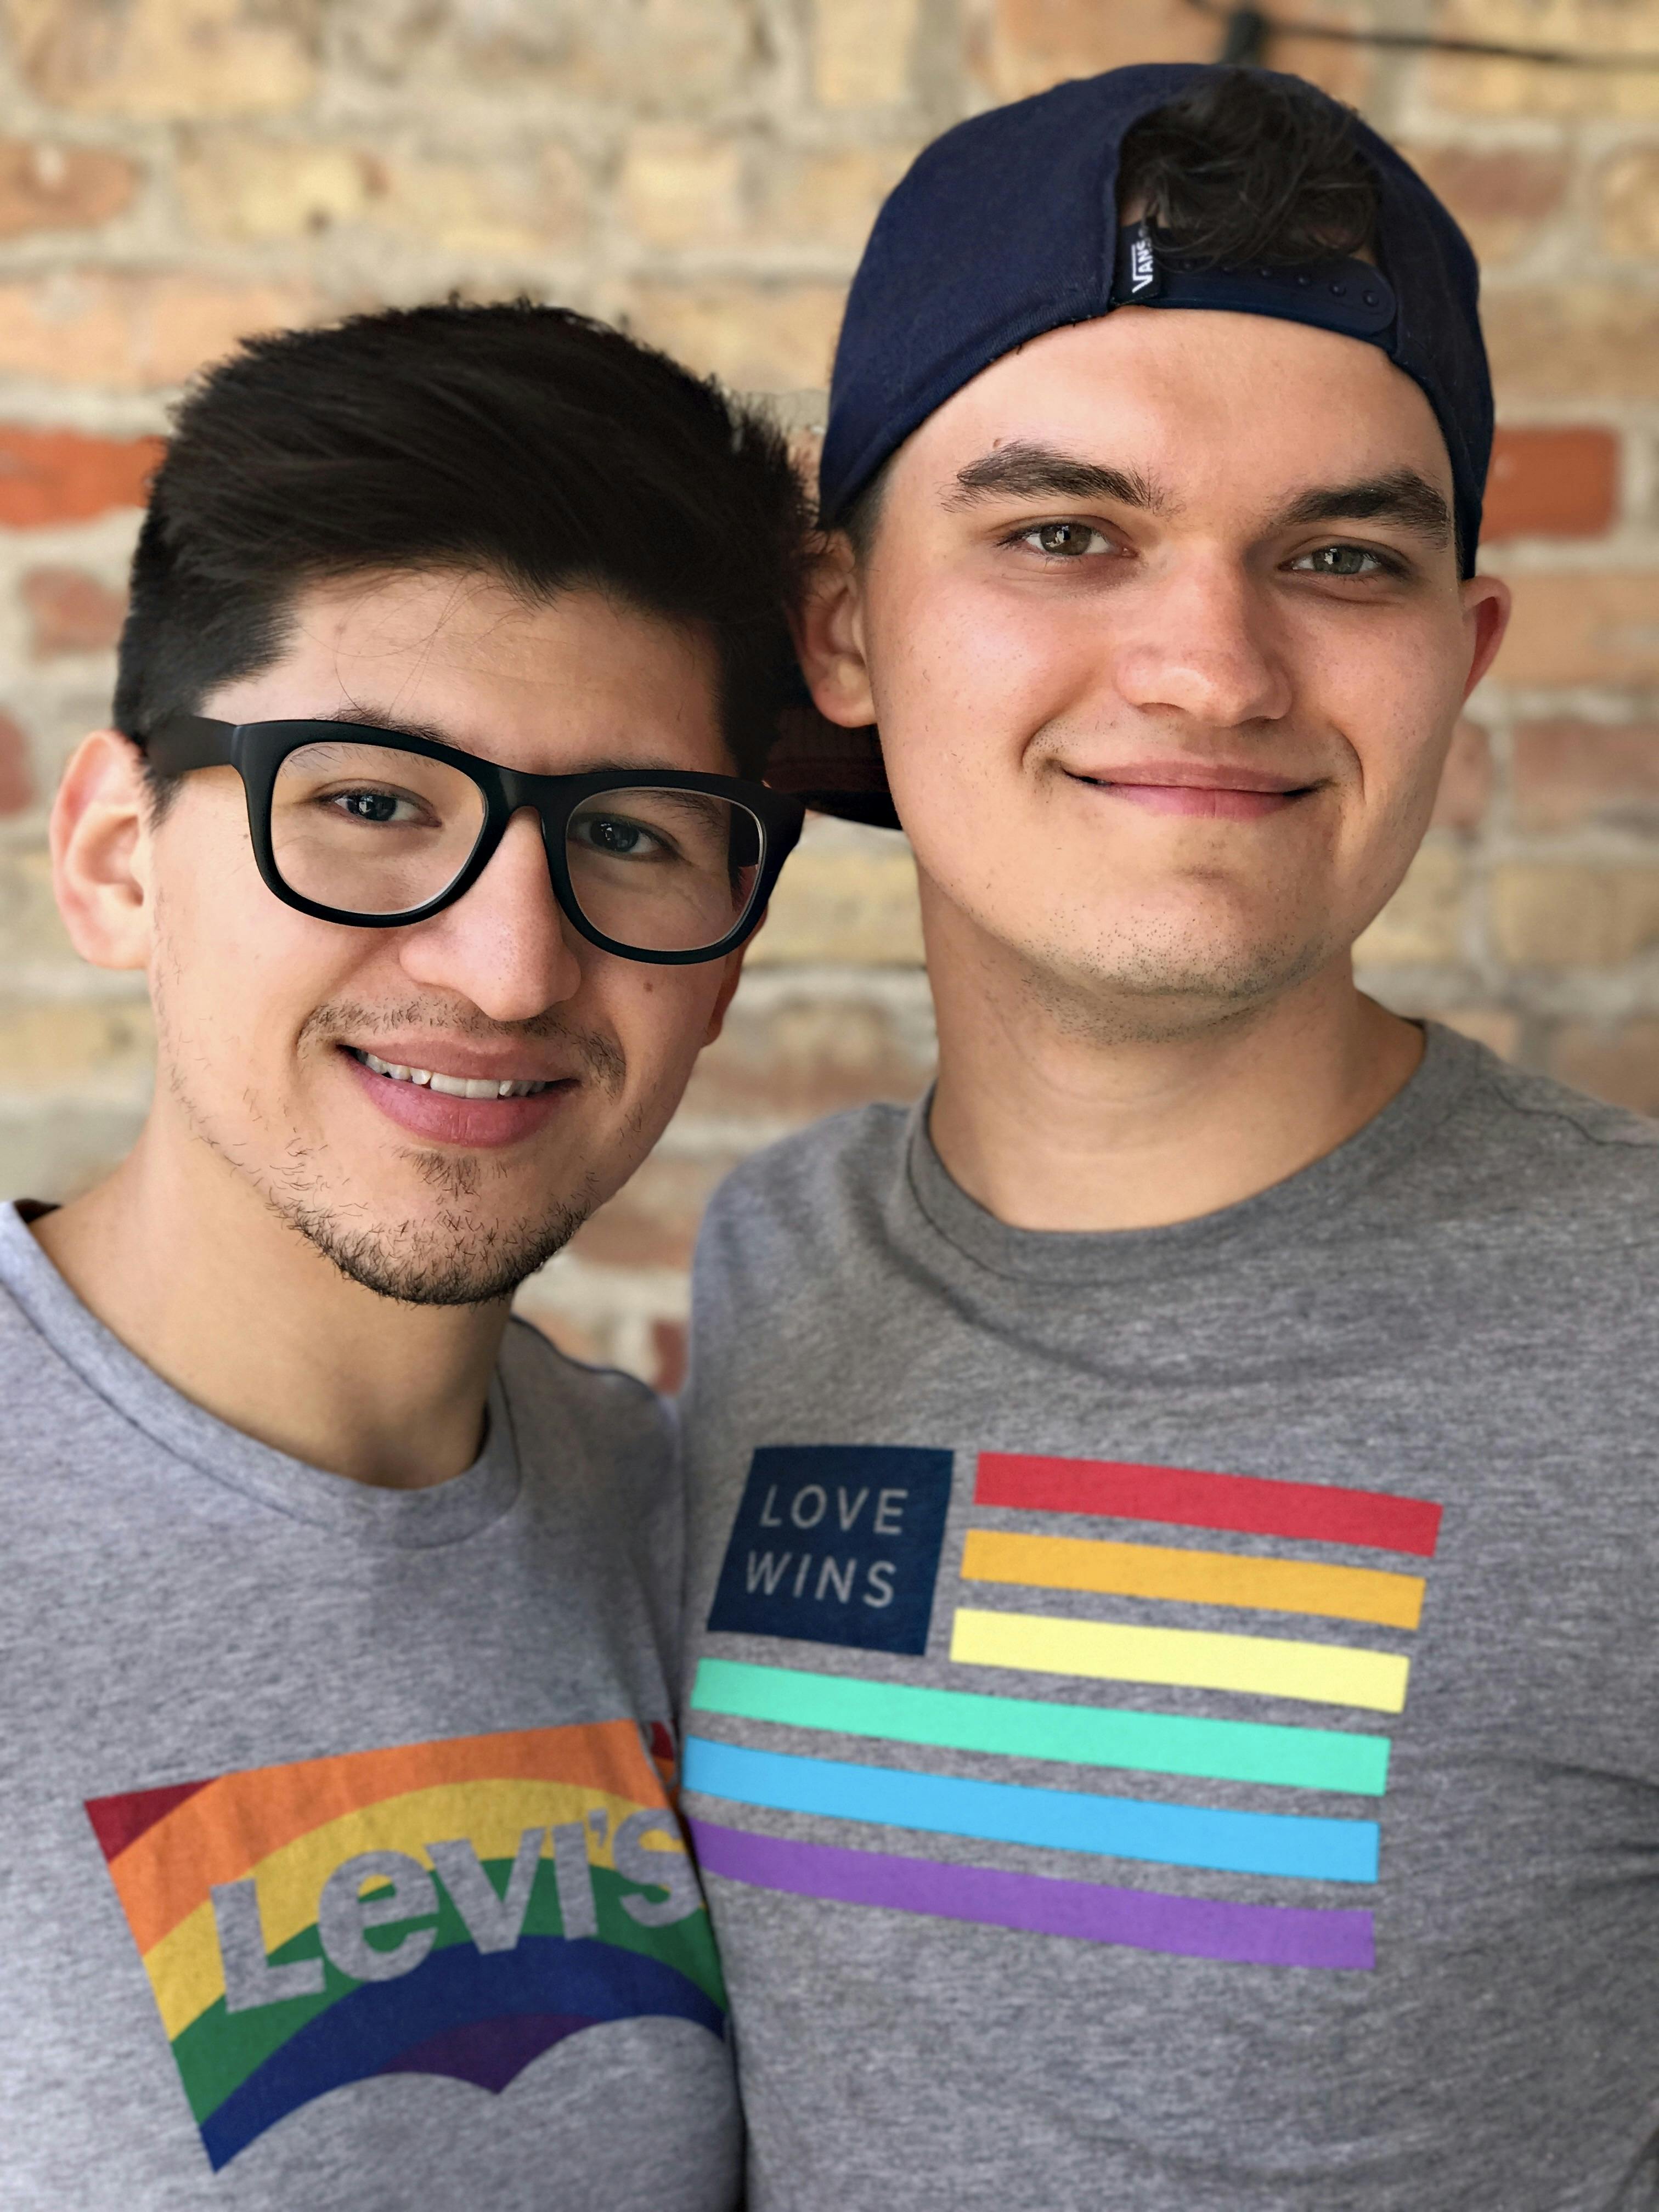 Casey and his partner, Rigo, at Chicago Pride.